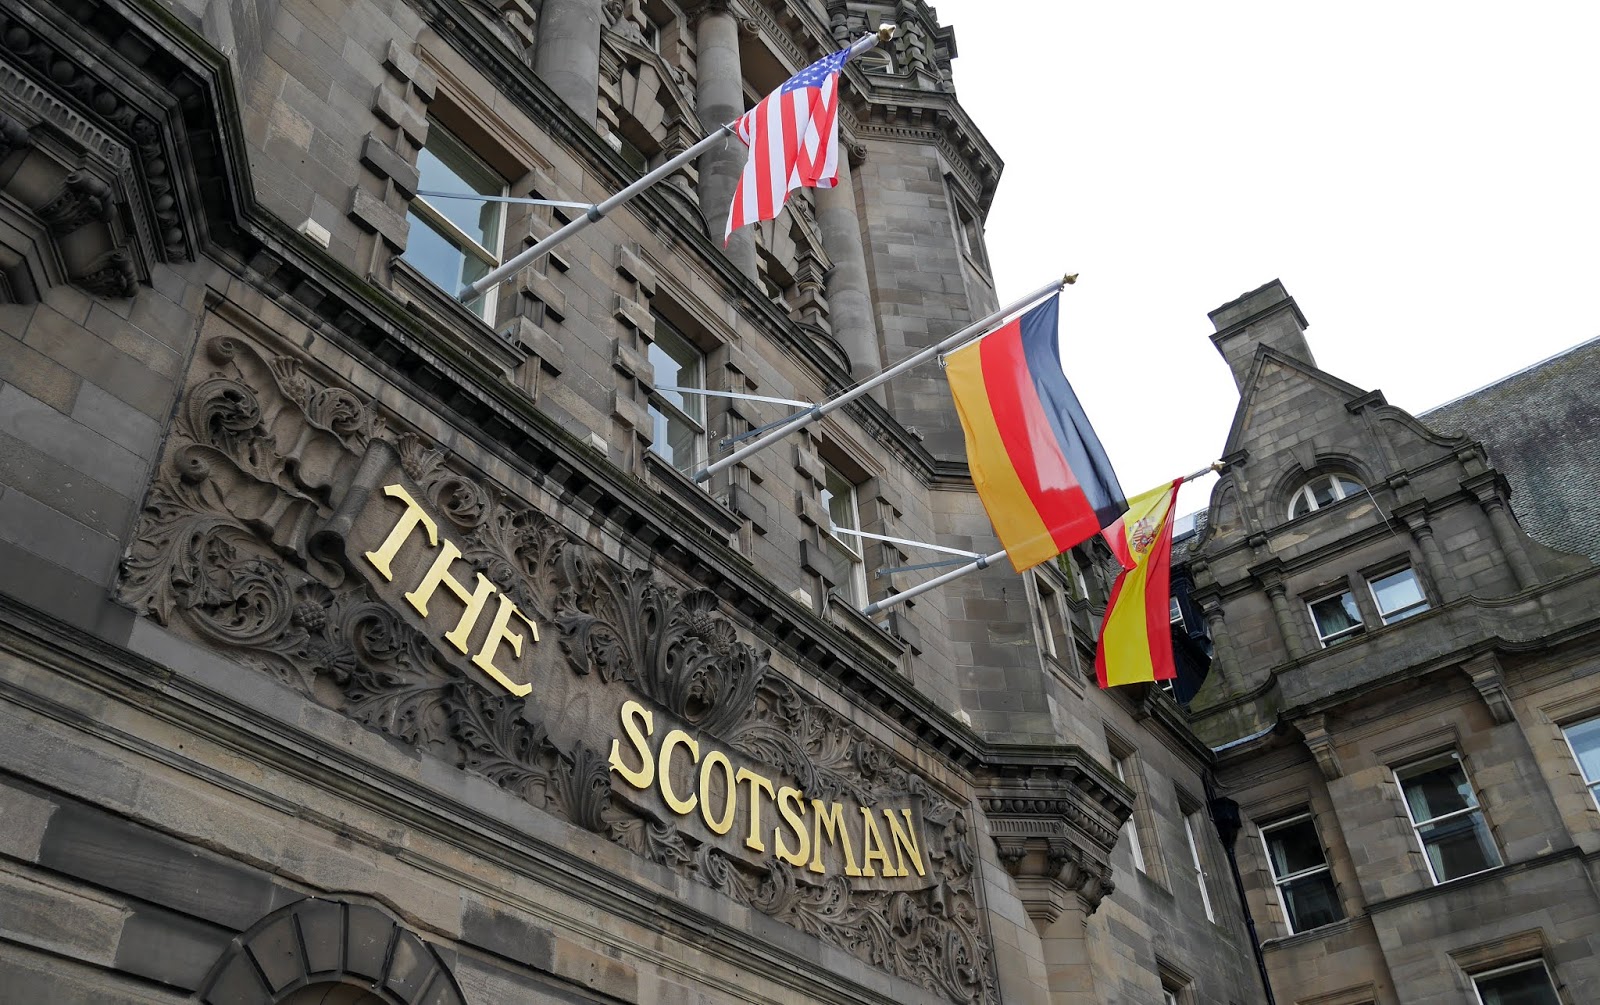 The Scotsman, Edinburgh